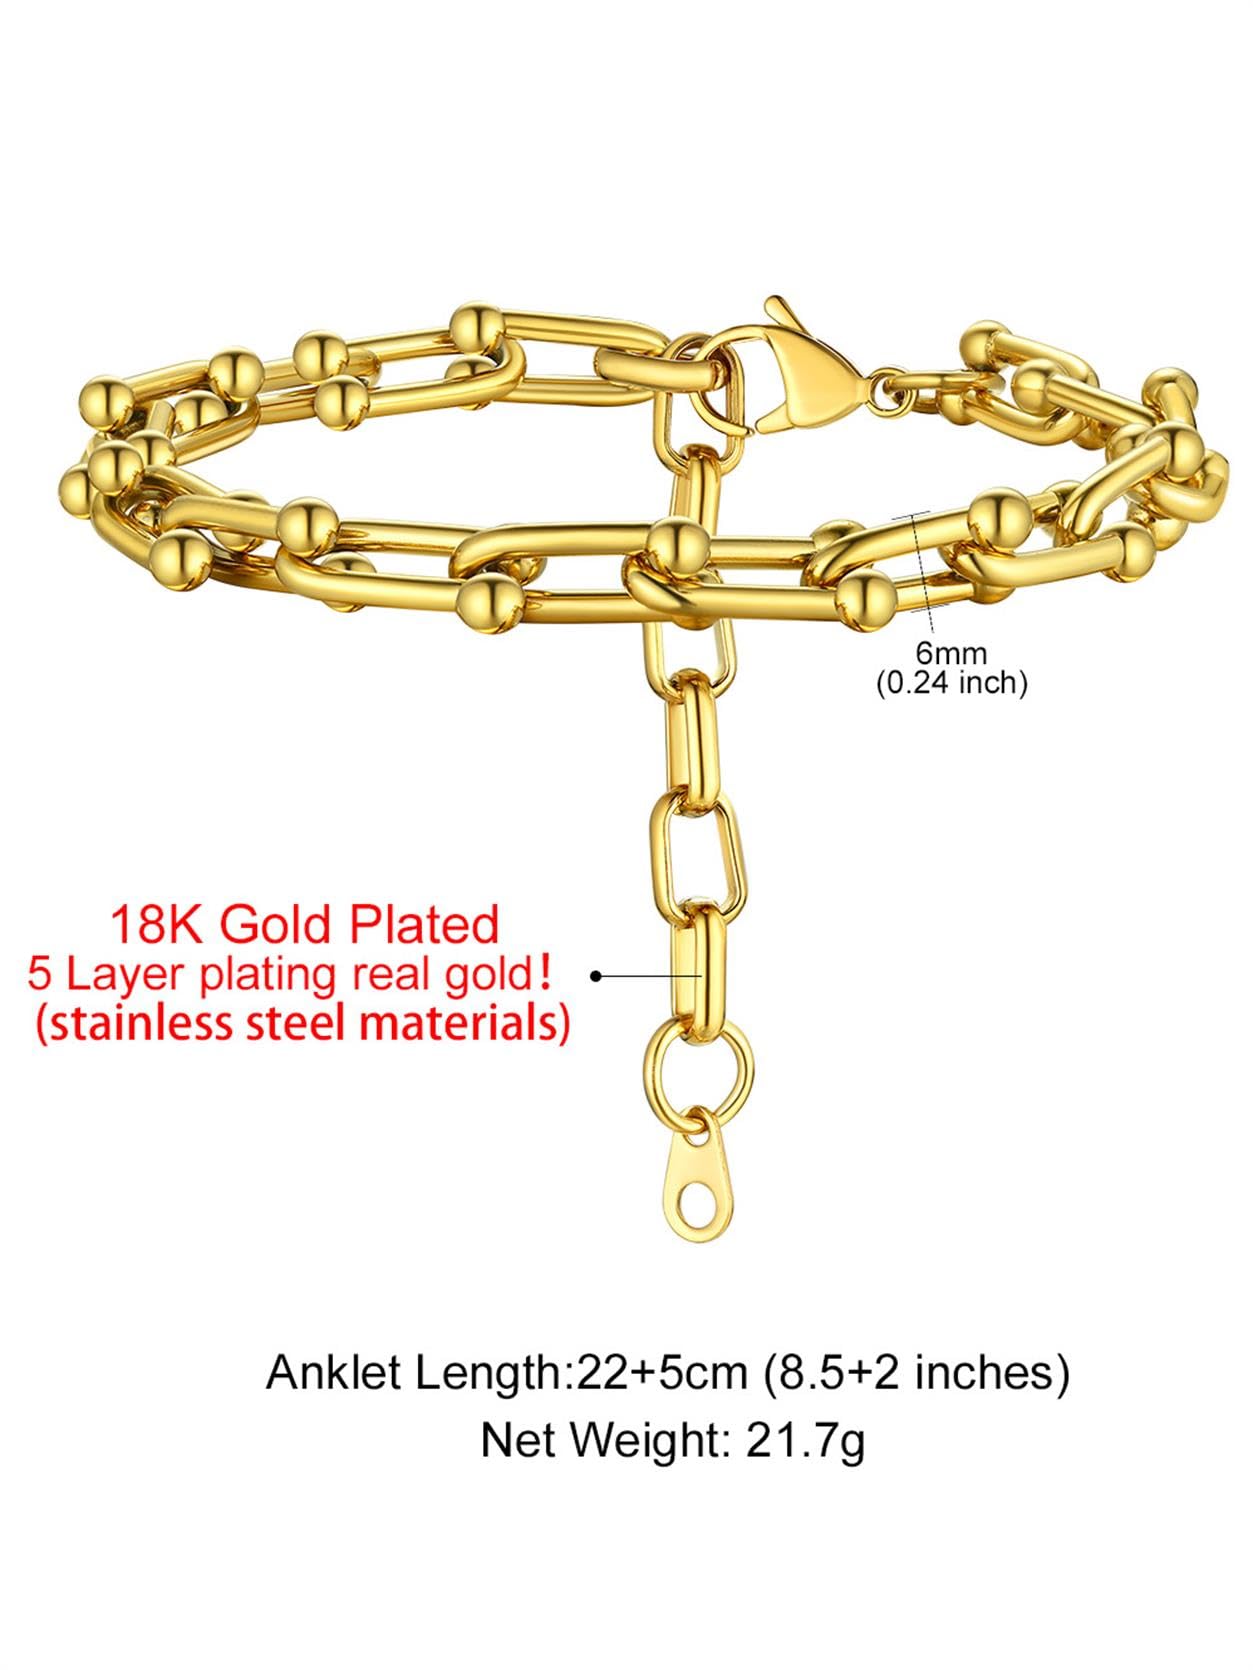 KeyStyle Paperclip Chain Choker for Women, 6mm U Shaped Link Bracelet Anklets, Minimalist Chains Necklace for Hip Hop Rapper